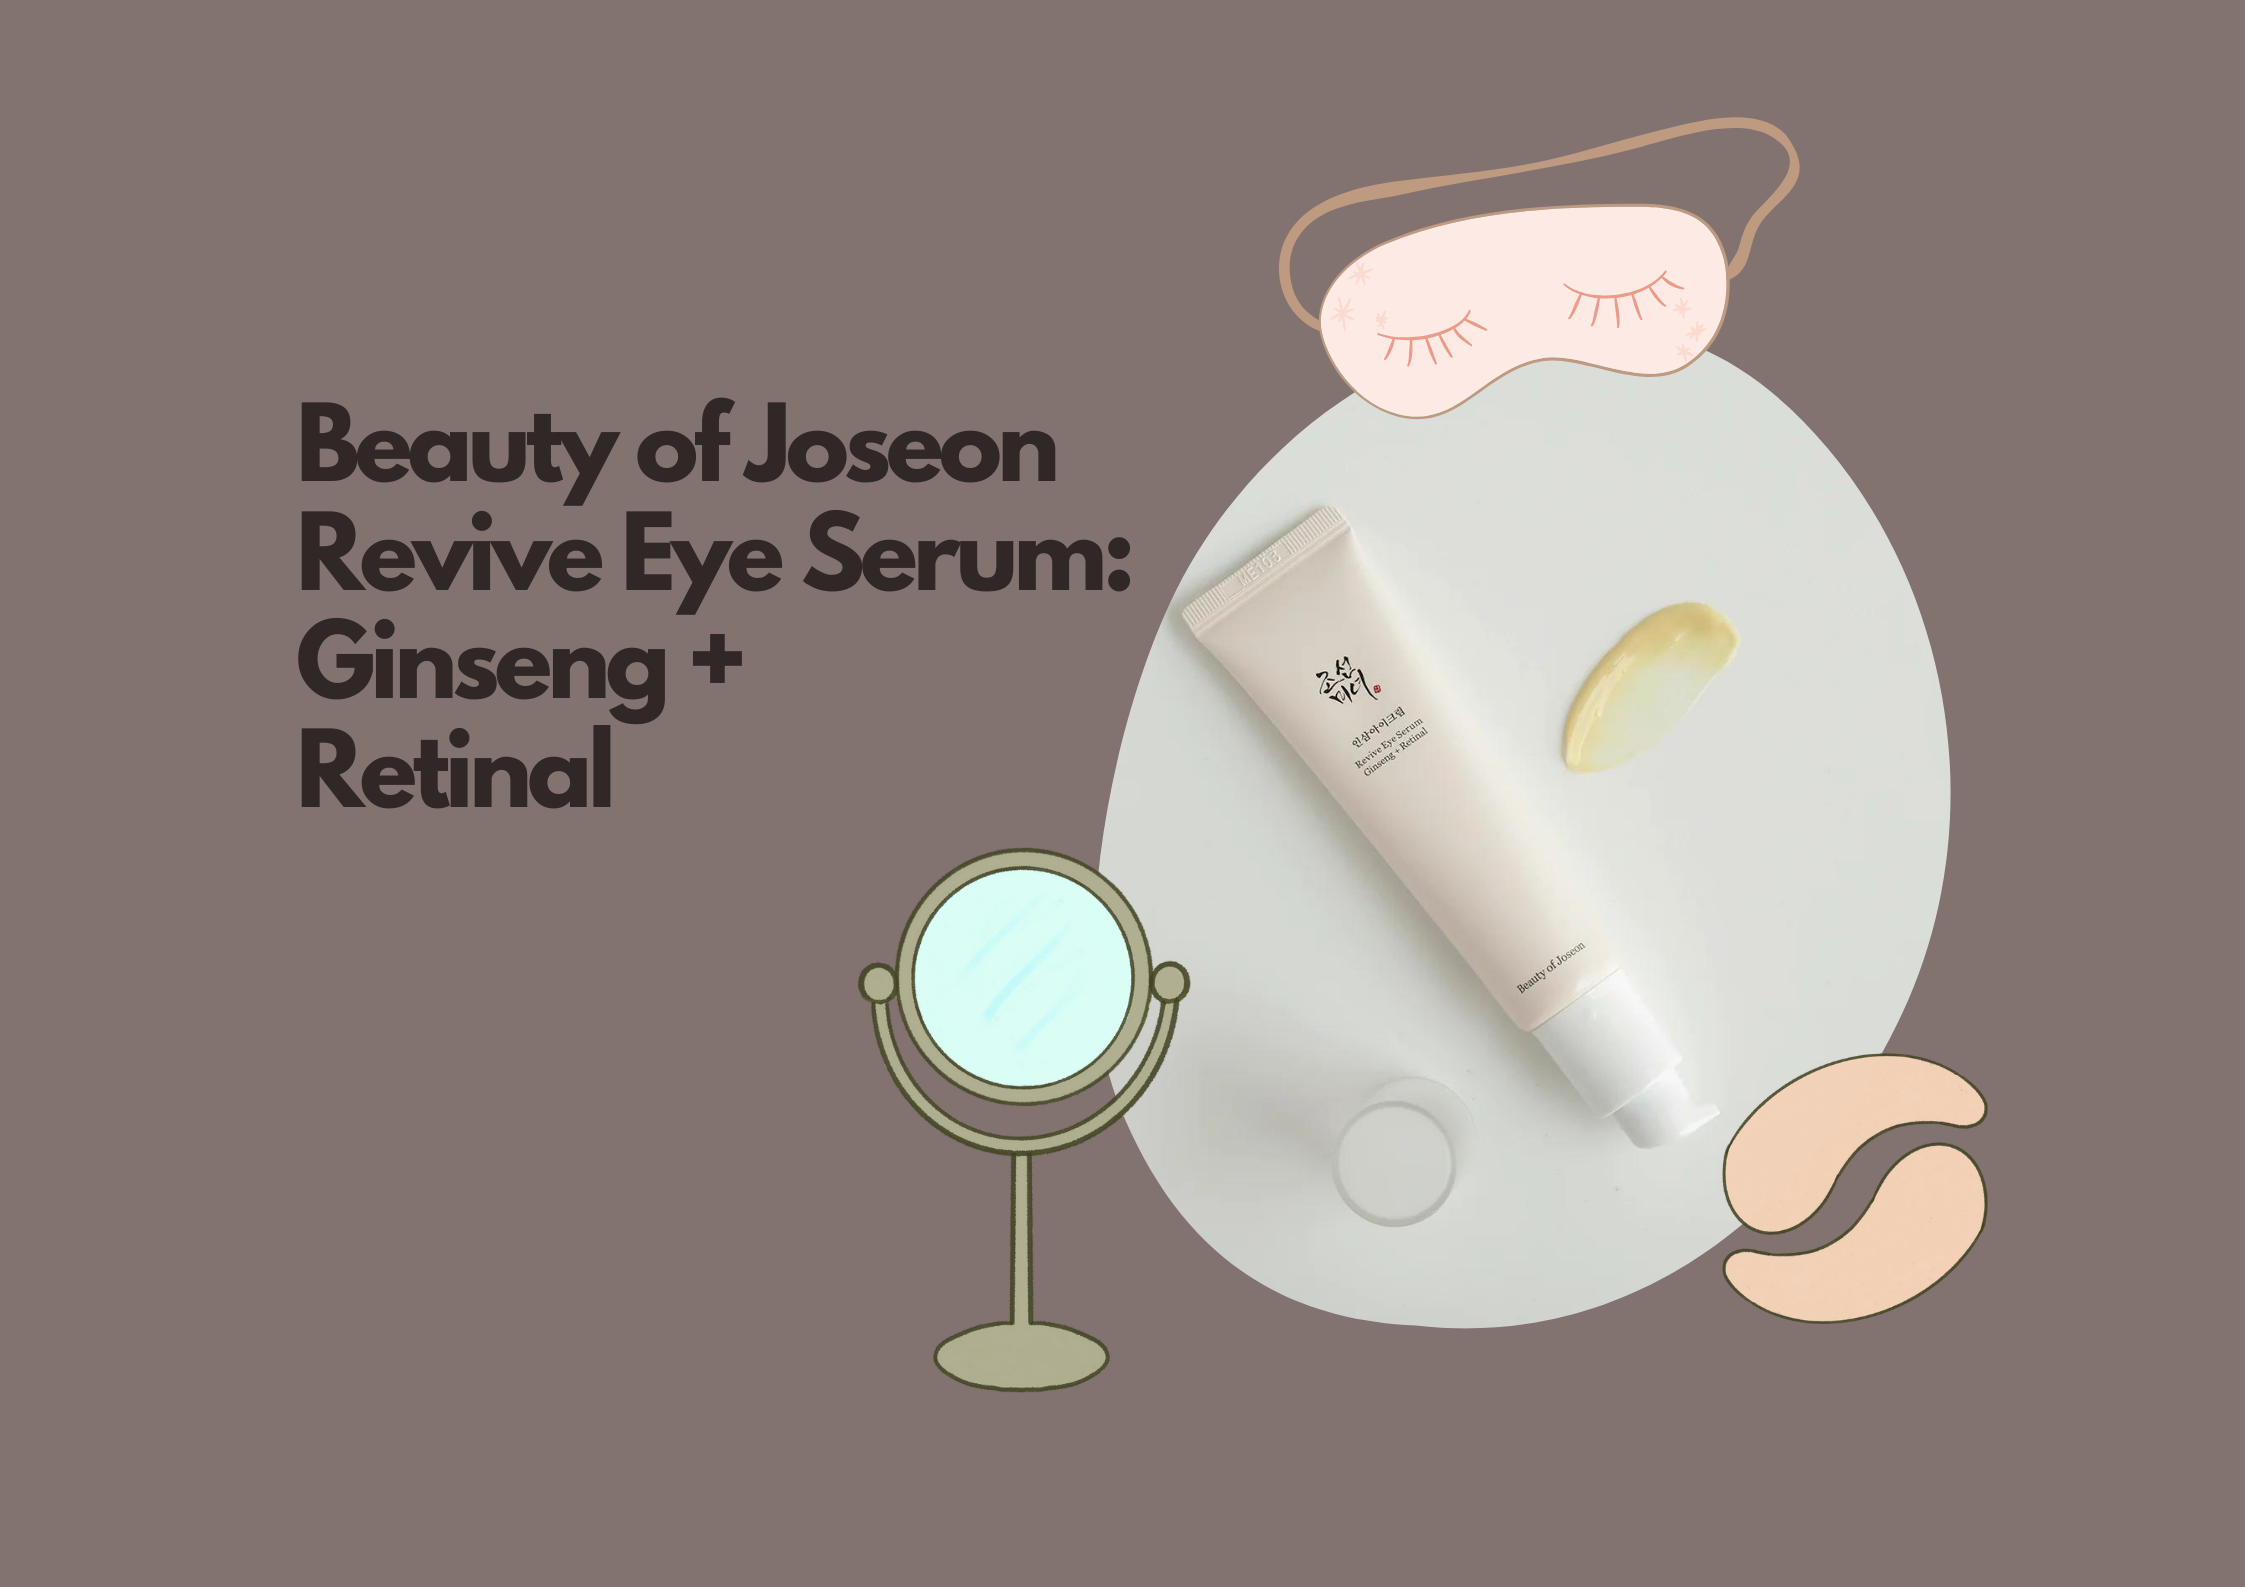 BEAUTY OF JOSEON Revive Eye Serum: Ginseng + Retinal